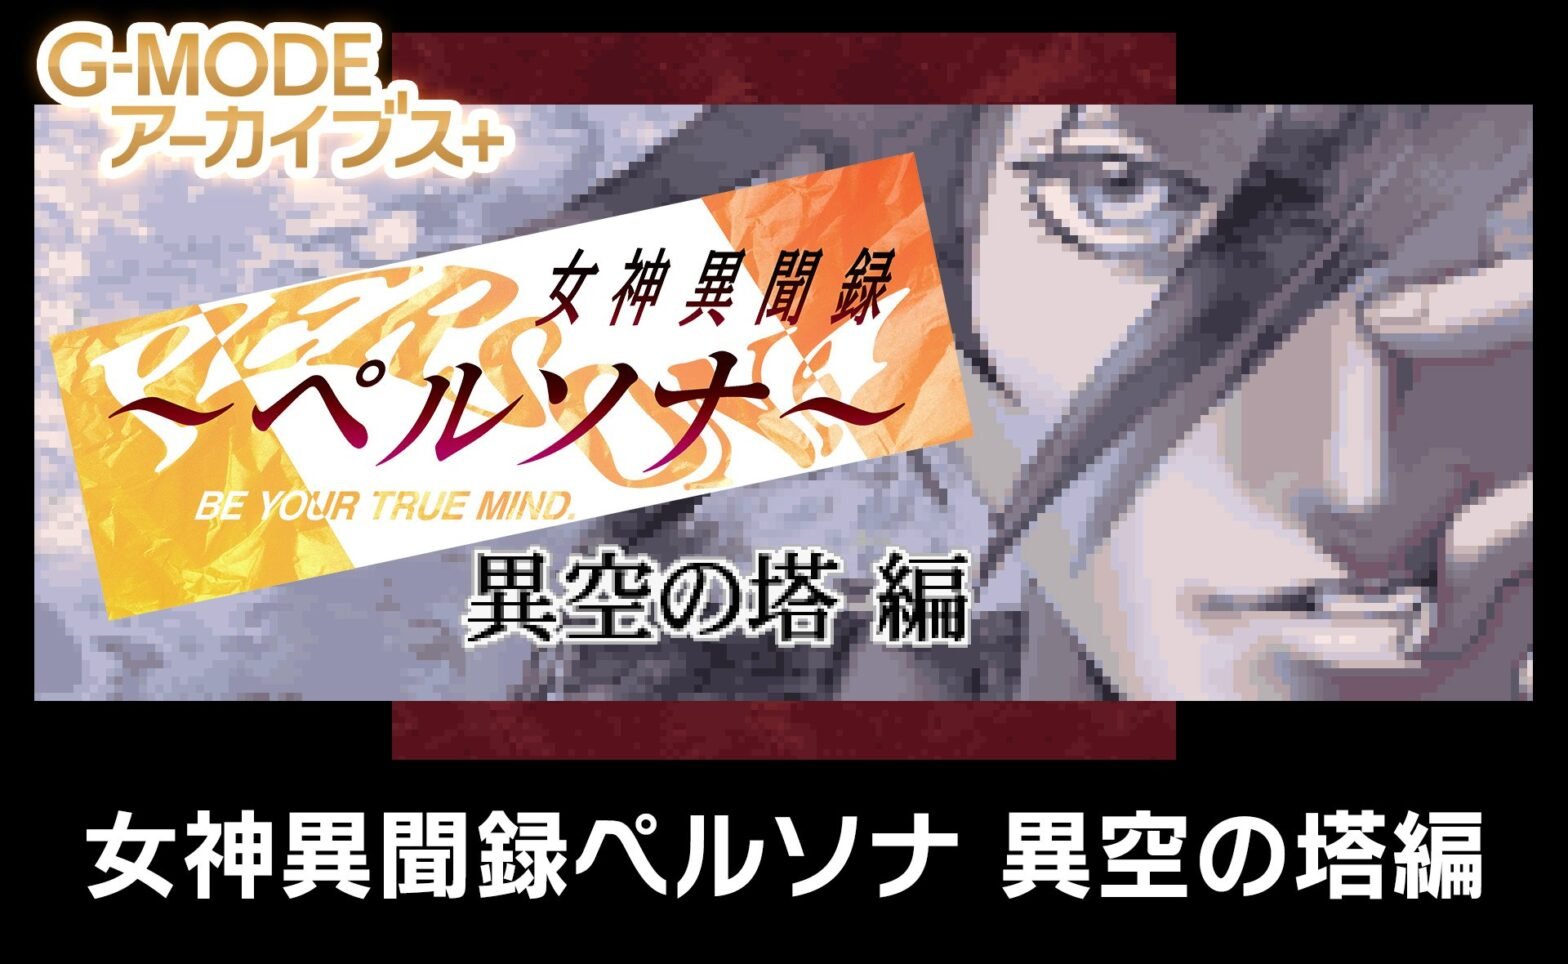 G-MODE Archives+: Megami Ibunroku Persona: Ikuu no Tou Hen announced for Switch, PC